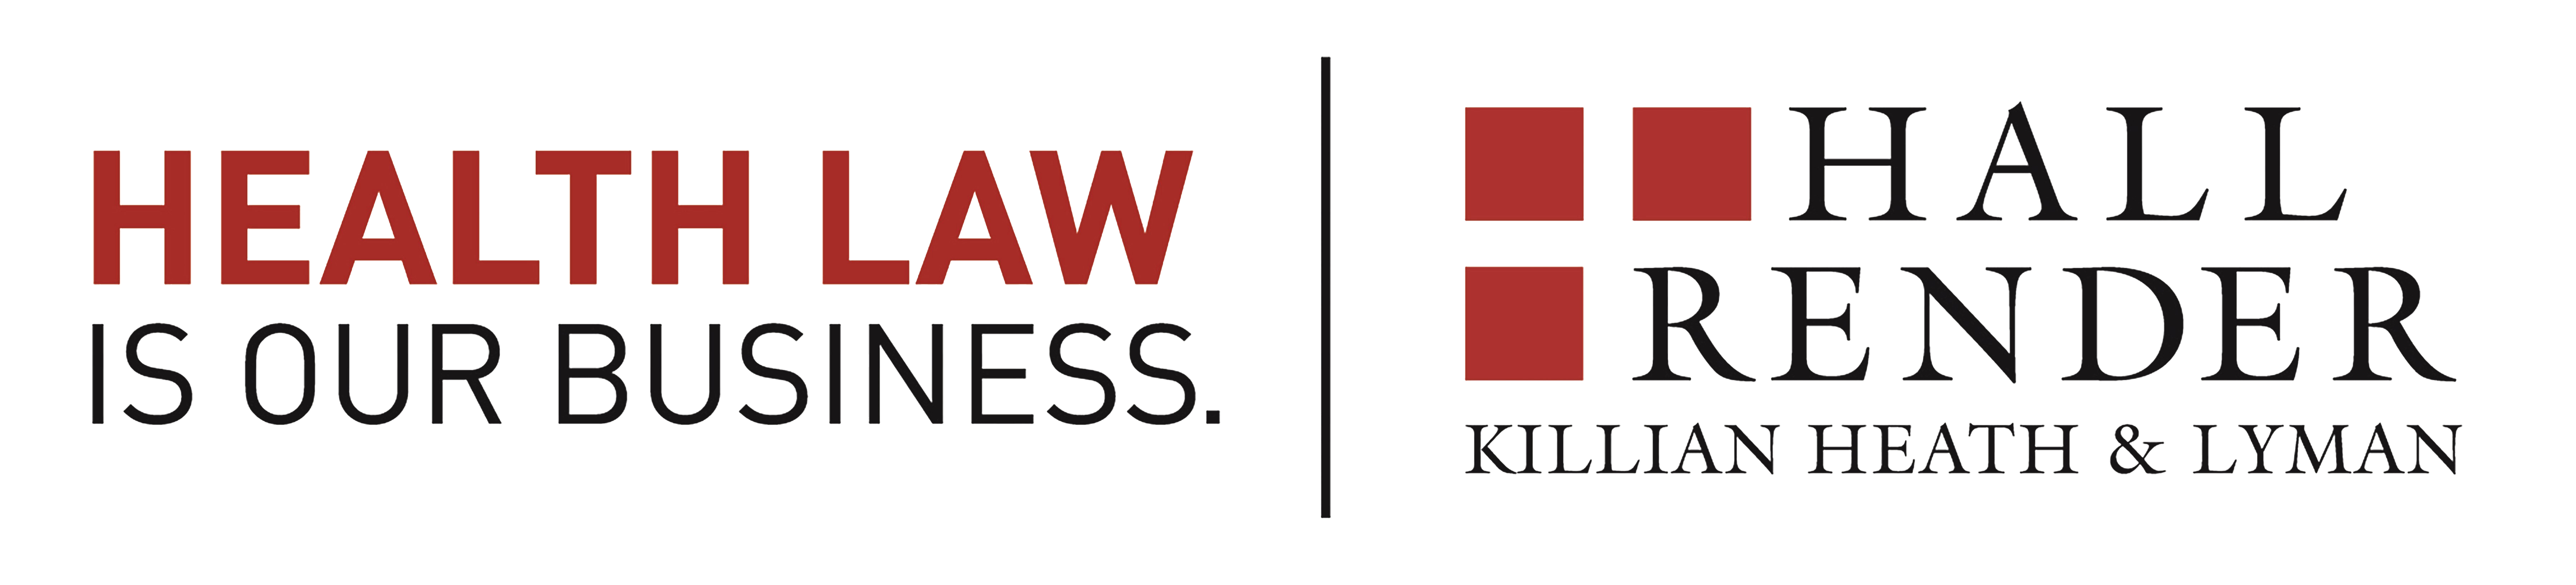 Health Law is Our Business | Hall Render Killian Health & Lyman